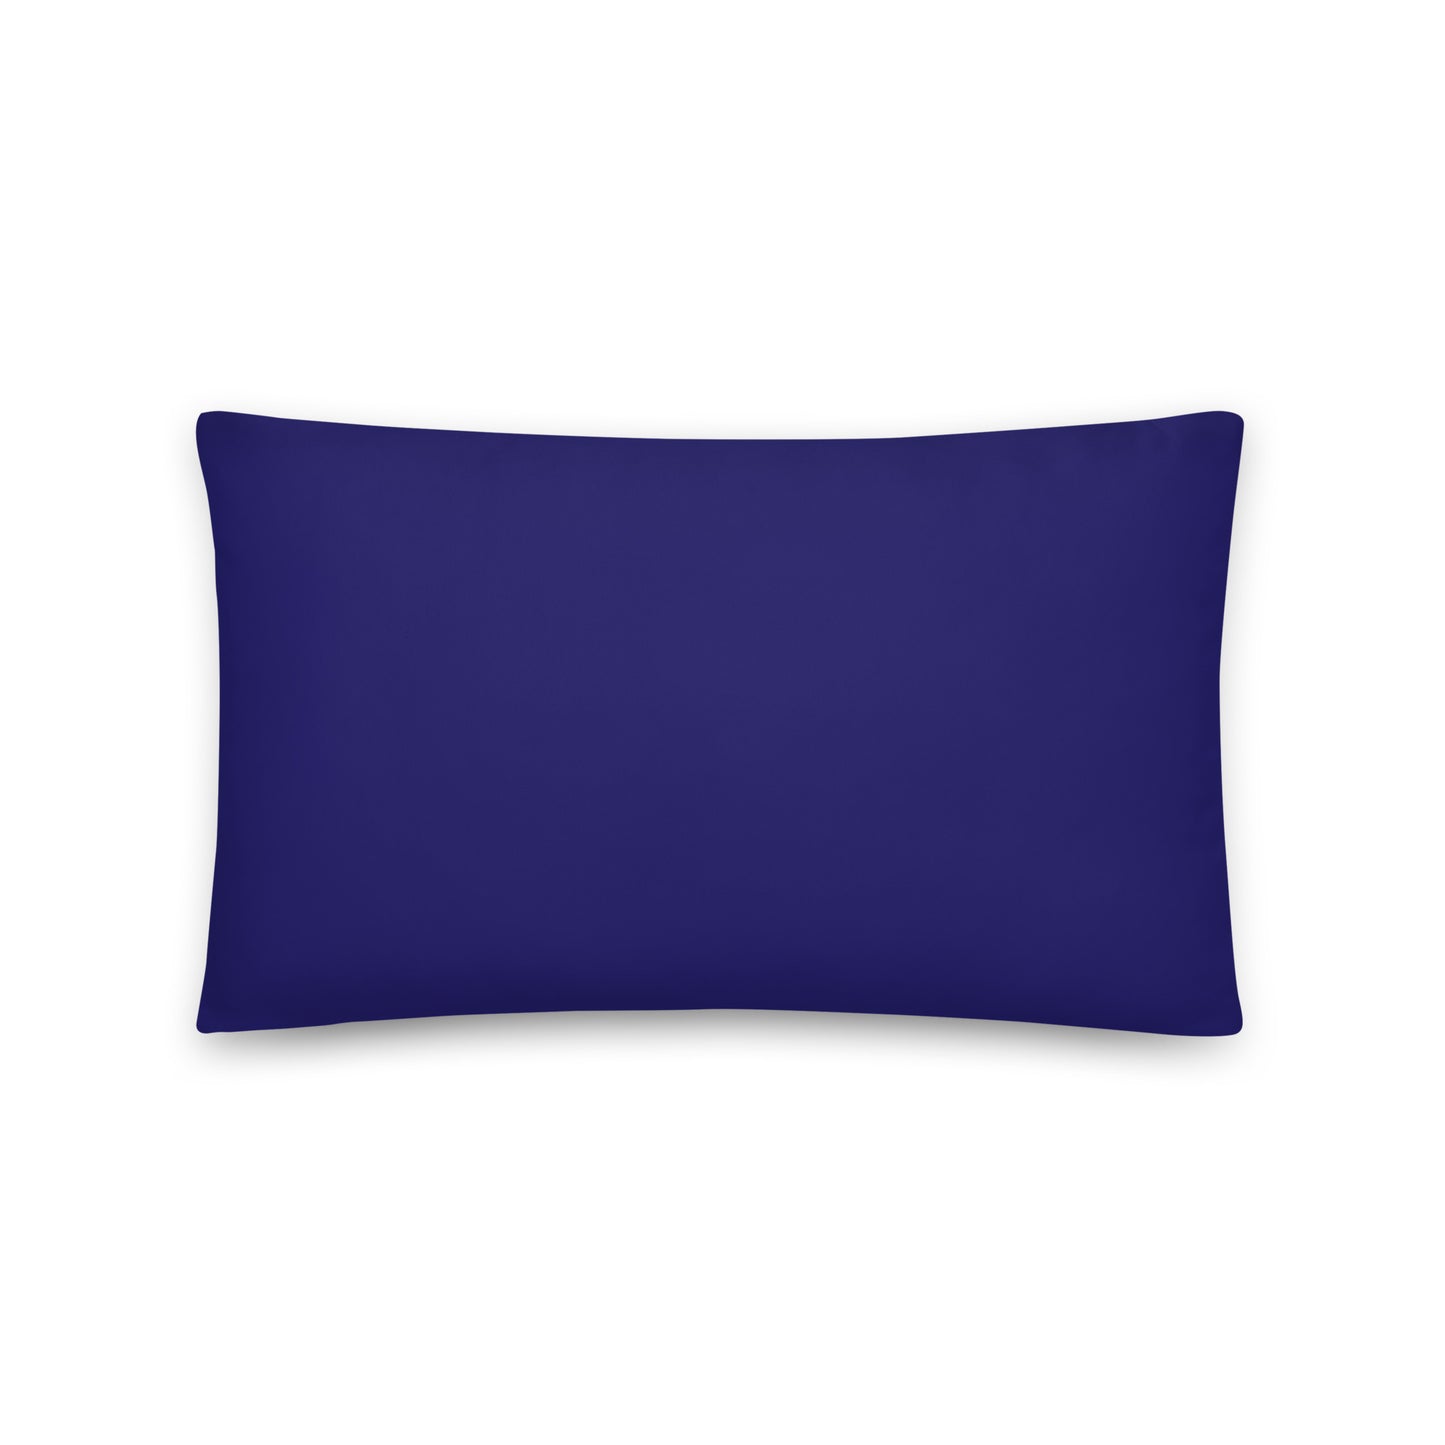 Australia Flag - Sustainably Made Pillows